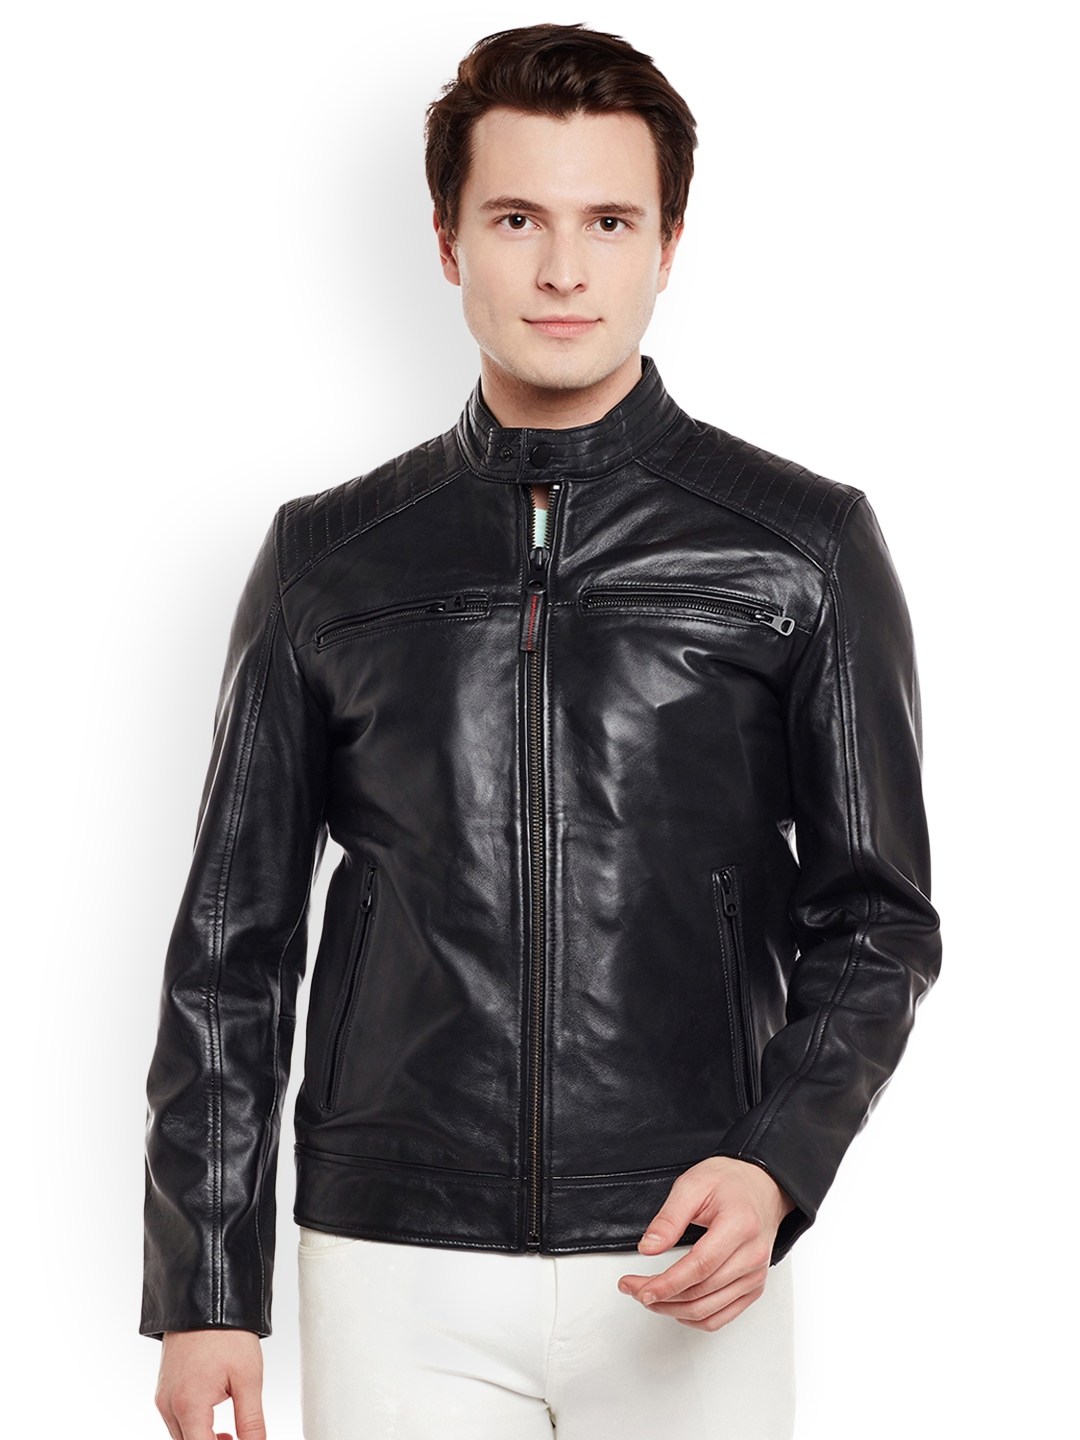 Justanned Distress Leather Denim Jacket M